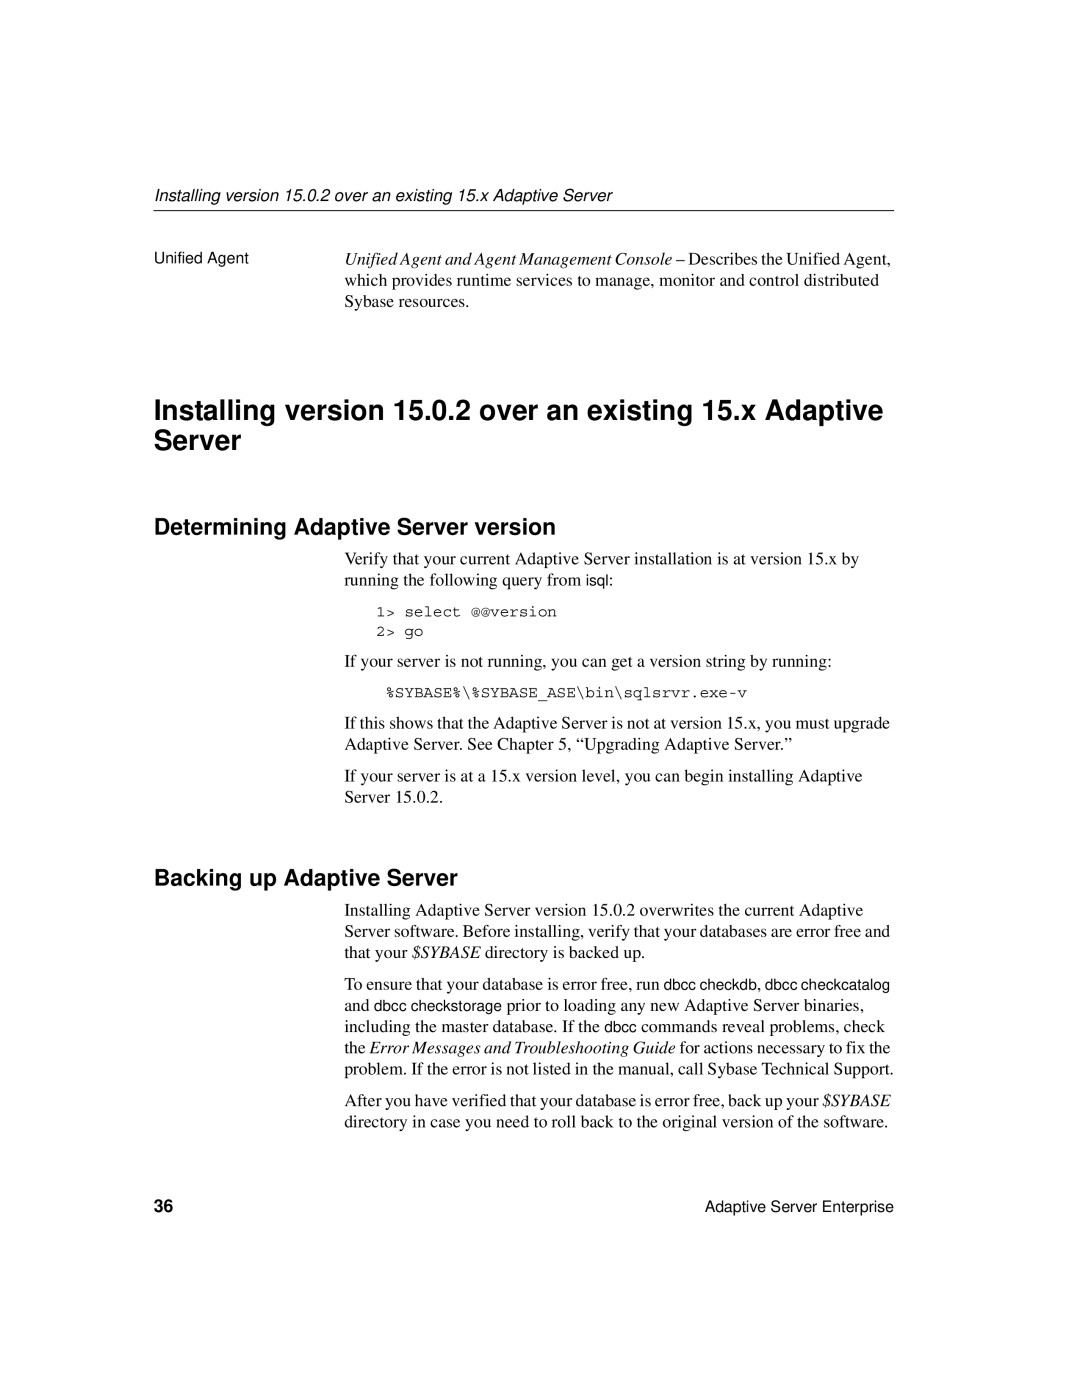 Sybase 15.0.2 manual Determining Adaptive Server version, Backing up Adaptive Server 